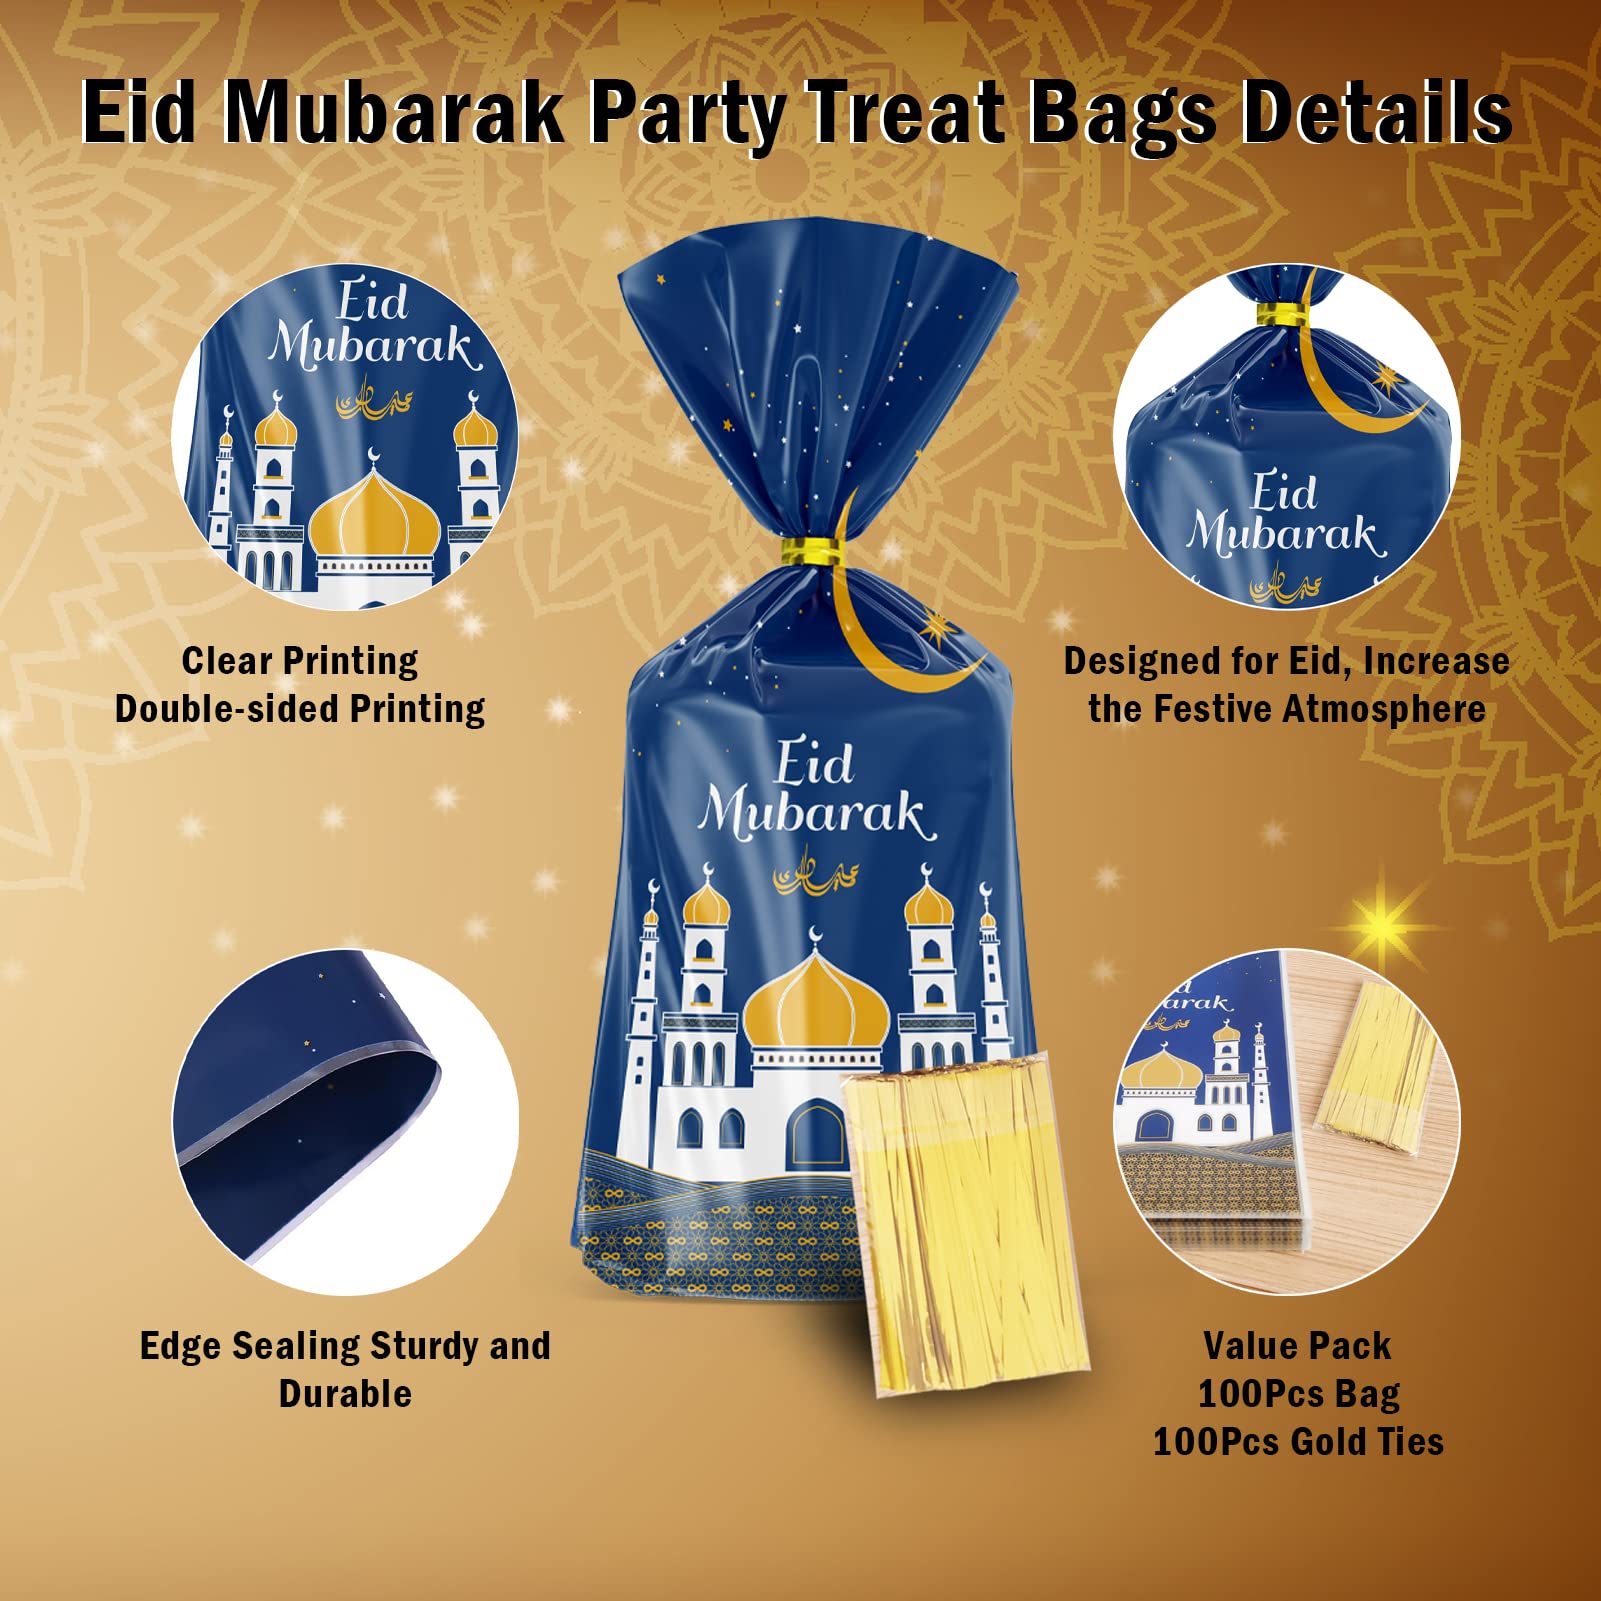 PopManko Eid Mubarak Party Treat Bags, 100Pcs Gift Bags, Ramadan Cellophane Favor Bags, Eid Mubarak Sweets Bags with Gold Ties for Home Eid Decorations, 27.5L* 12.5W